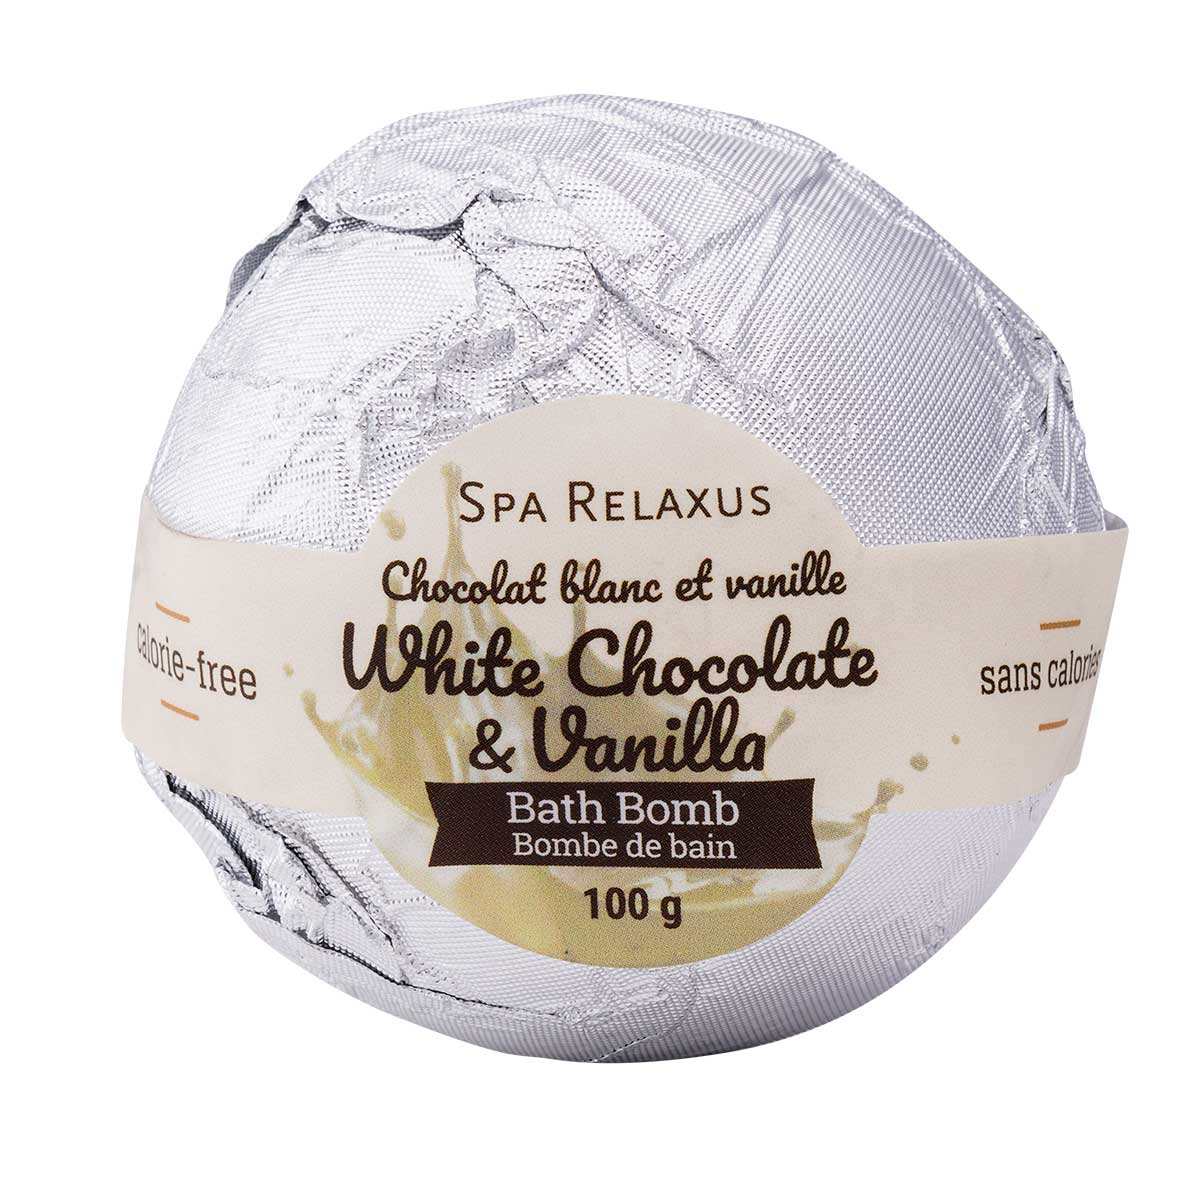 Wholesale Chocolate Bath Bombs